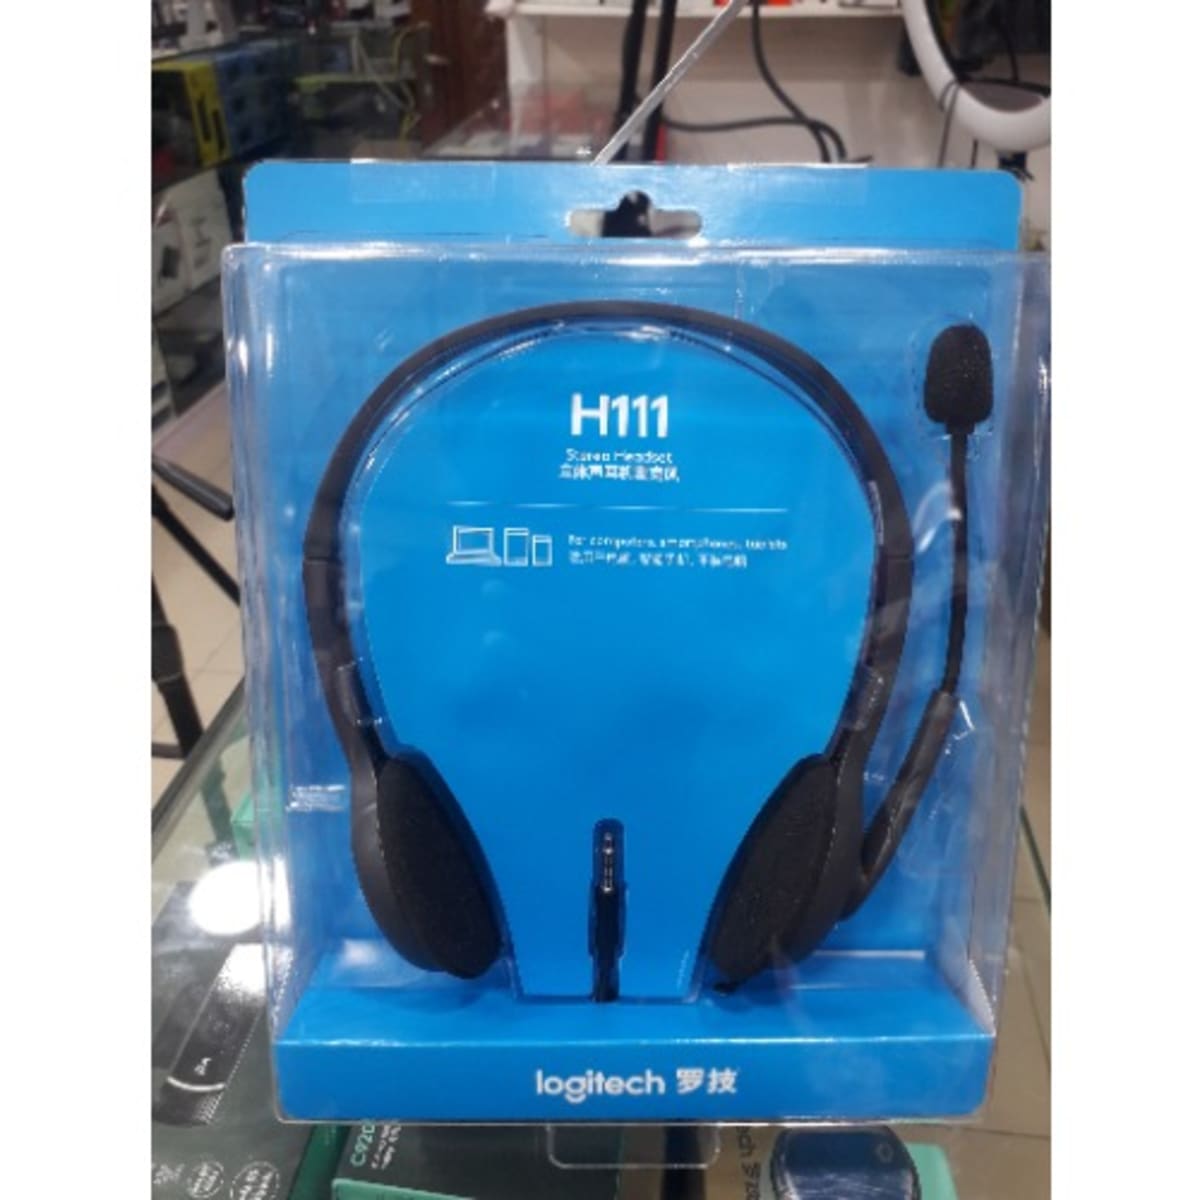 Logitech H111 Wired Stereo Headset | Konga Online Shopping